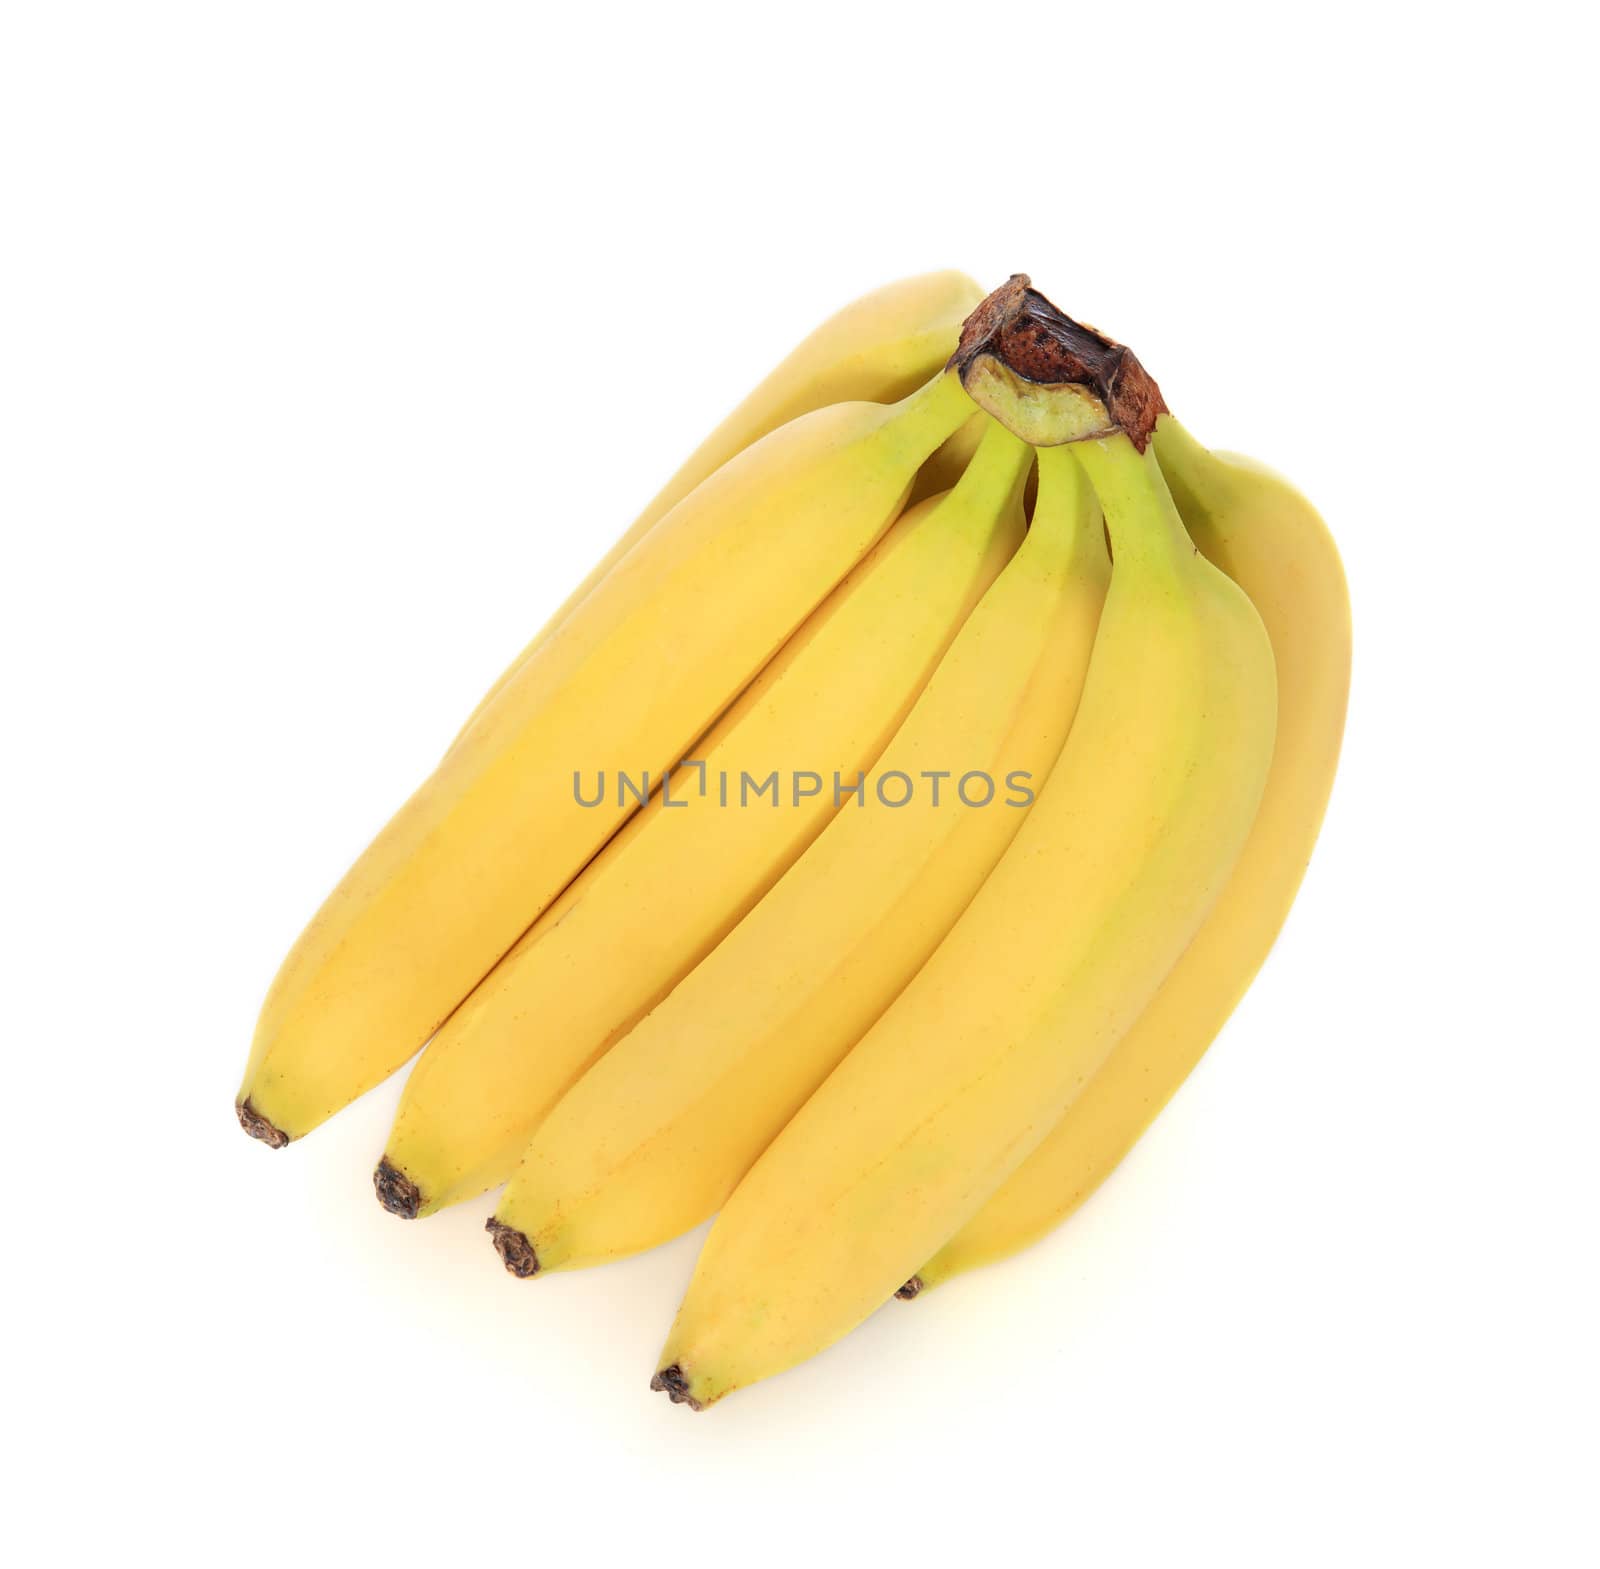 Ripe banana on white background.